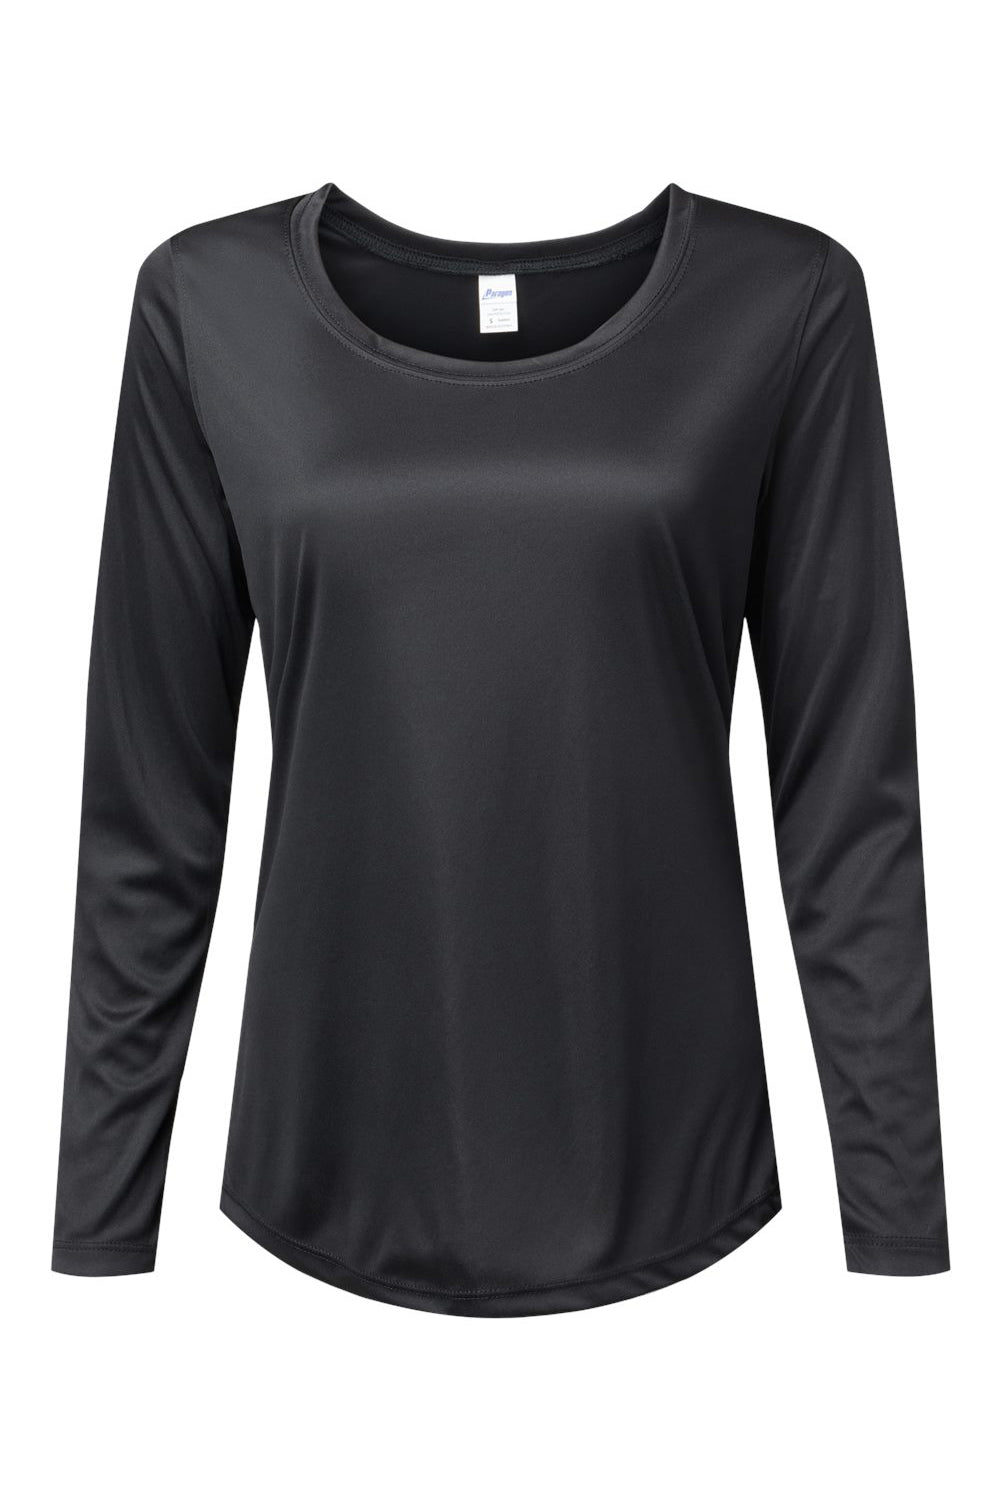 Paragon 214 Womens Islander Performance Long Sleeve Scoop Neck T-Shirt Black Flat Front